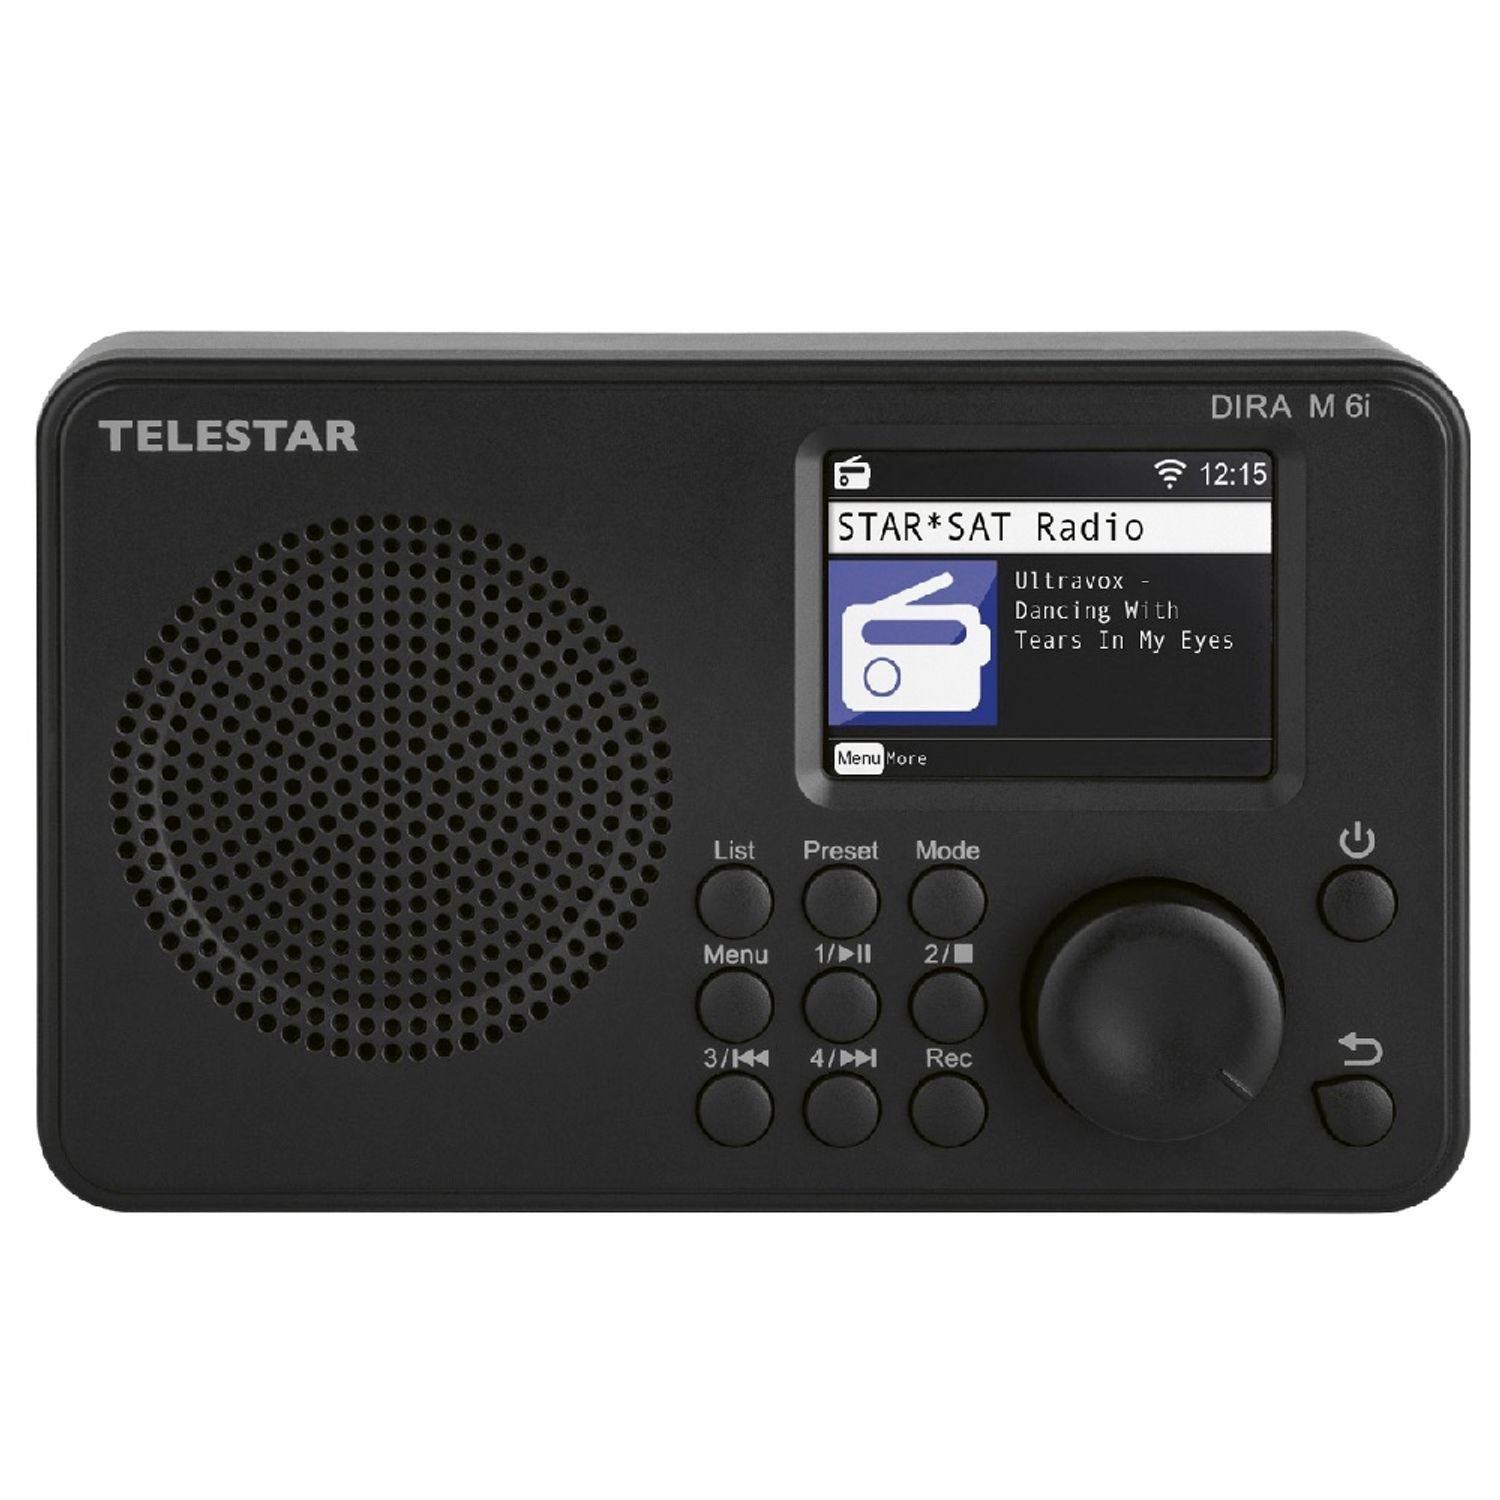 TELESTAR DIRA M 6i hybrid Radio Internetradio DAB+/FM RDS, WiFi, Bluetooth Digitalradio (DAB) (DAB+, UKW, Internetradio, 4 W, Steuerung per App, USB Musikplayer, kompaktes Multifunktionsradio) | Digitalradios (DAB+)